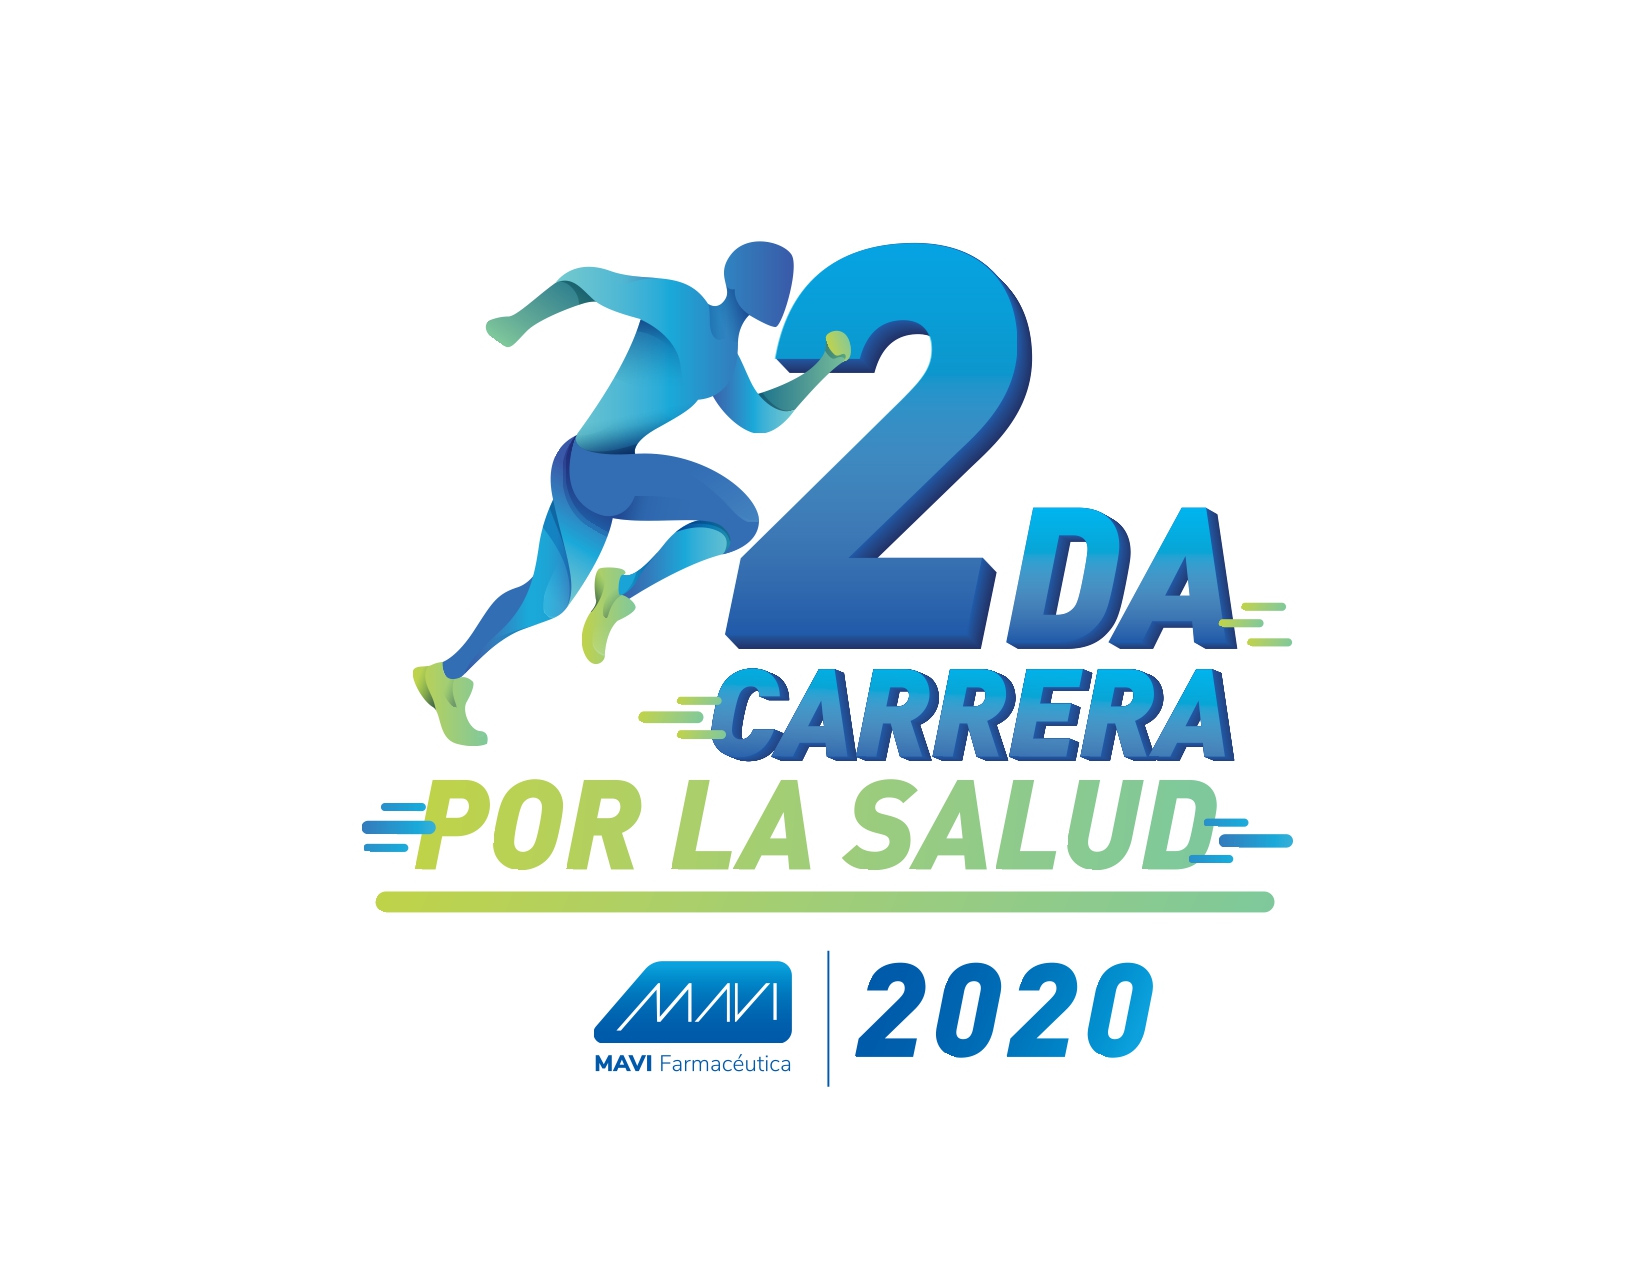 2DA CARRERA POR LA SALUD VIRTUAL 2020